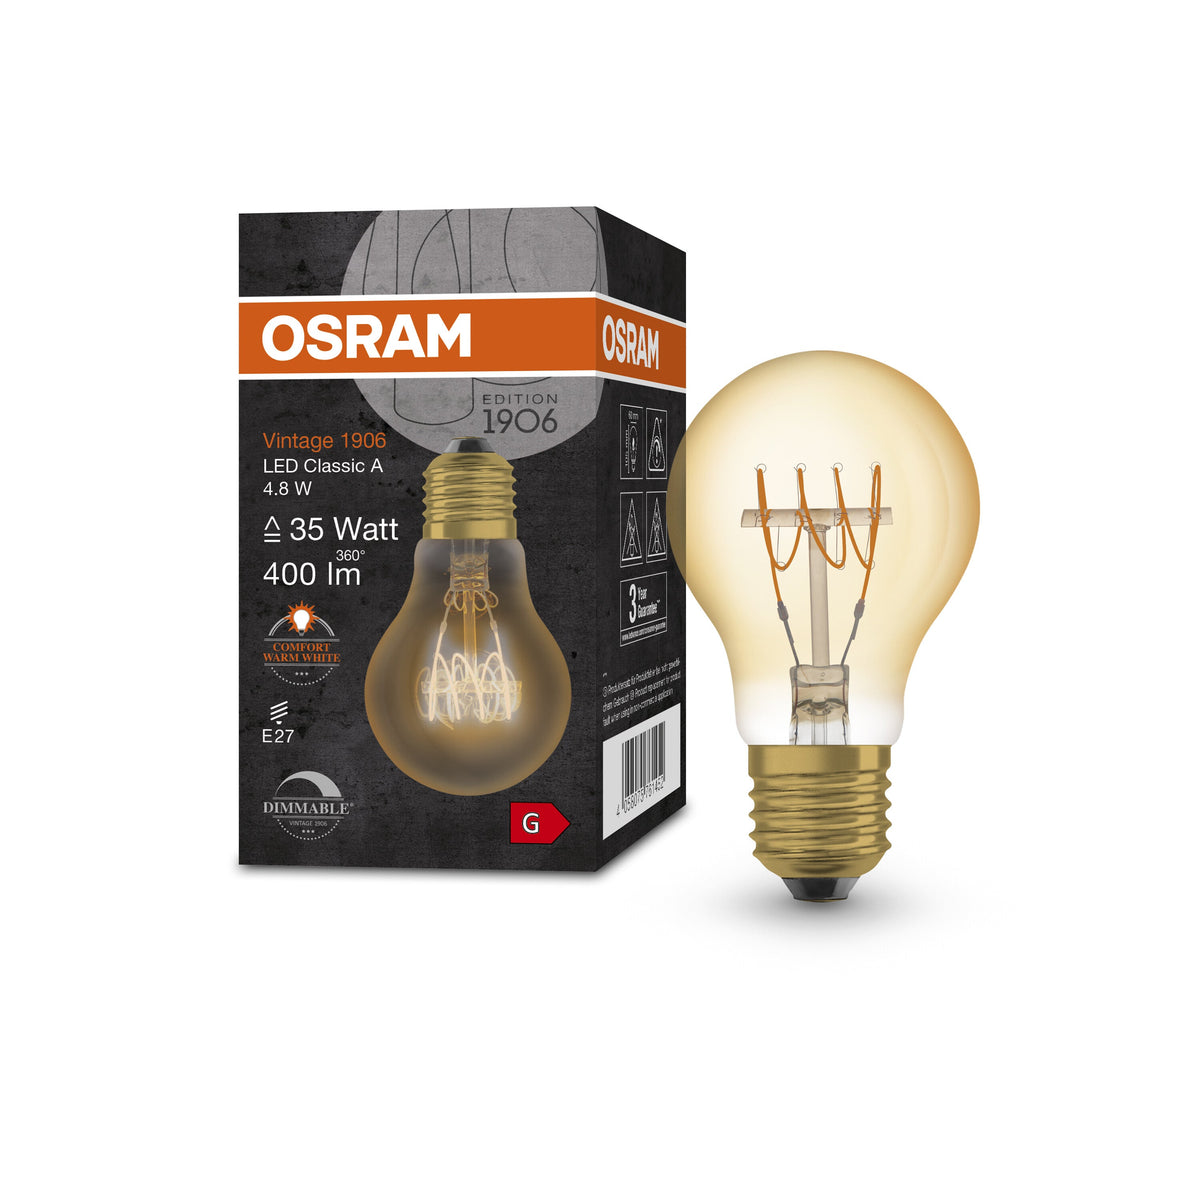 Lampada LED OSRAM Vintage 1906, tinta oro, 4,8W, 400lm